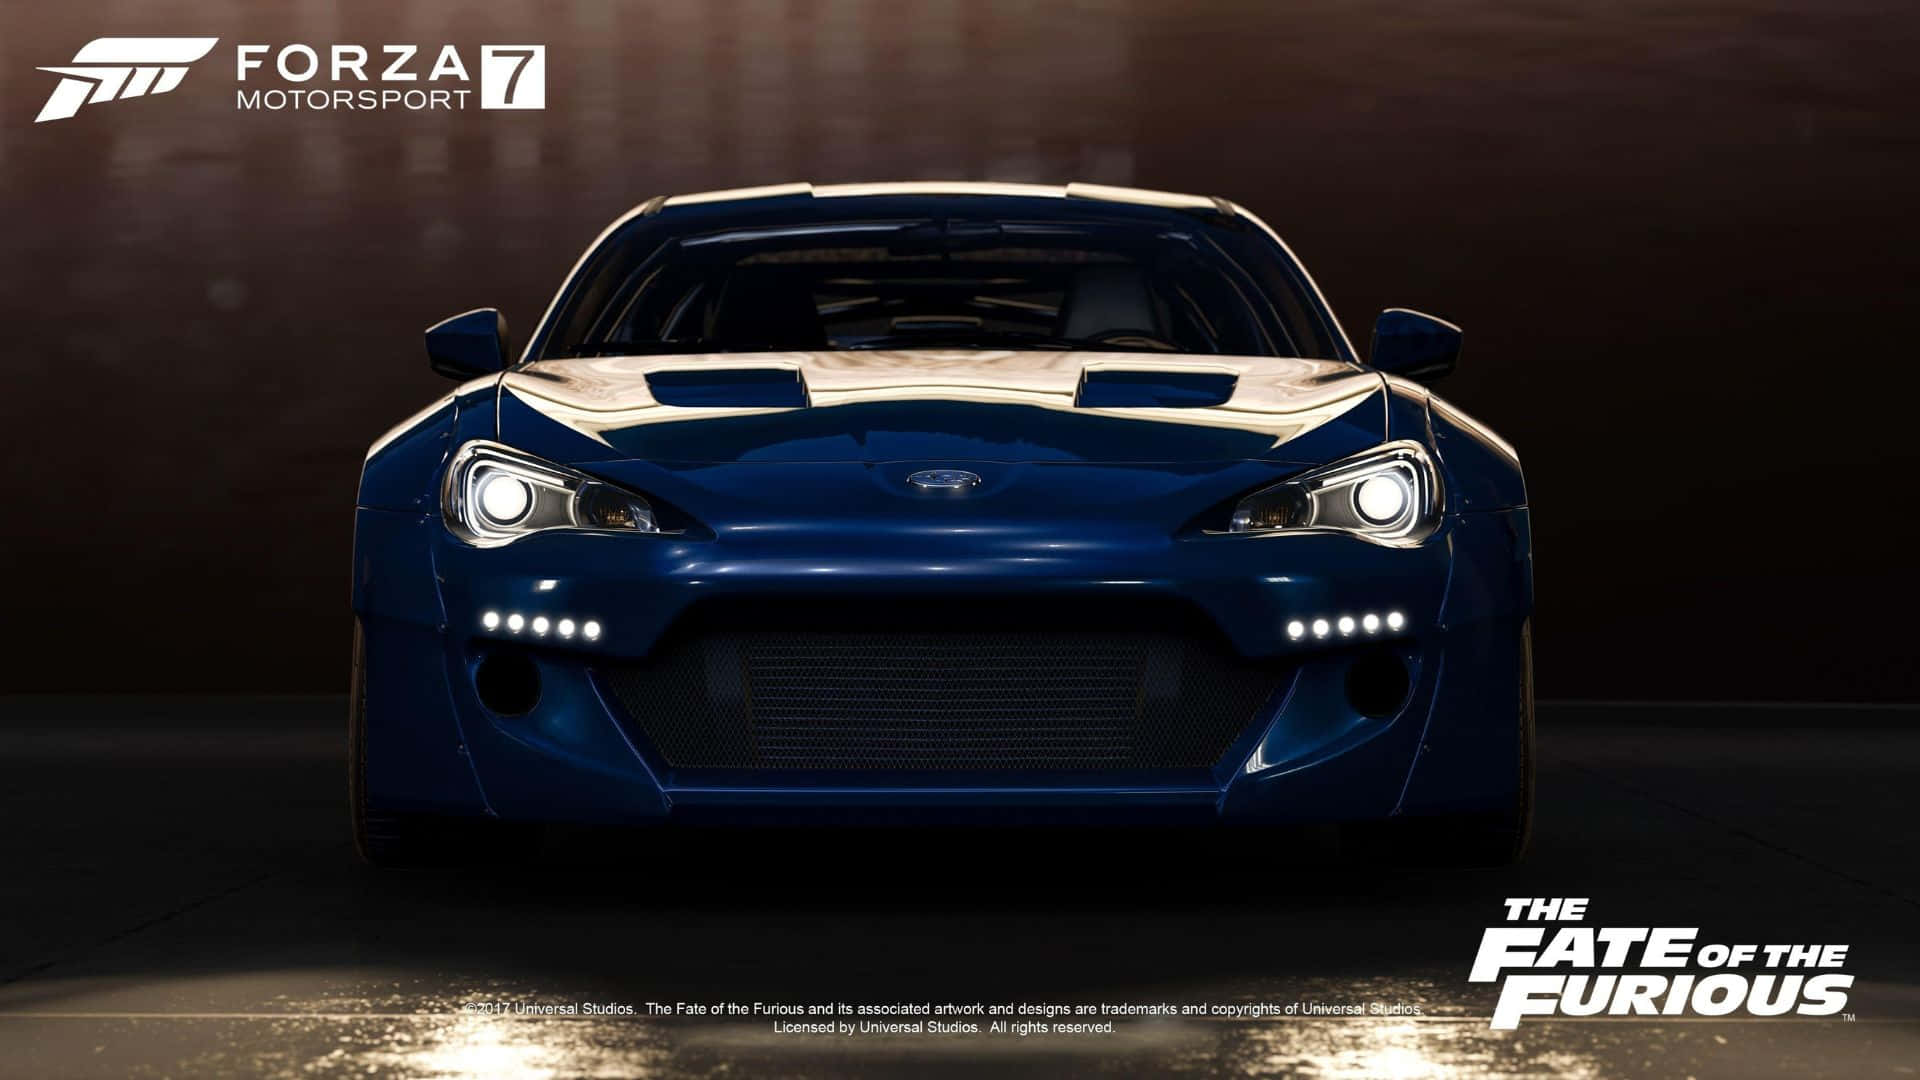 Hd Forza Motorsport 7 Background & Subaru BRZ Wallpaper